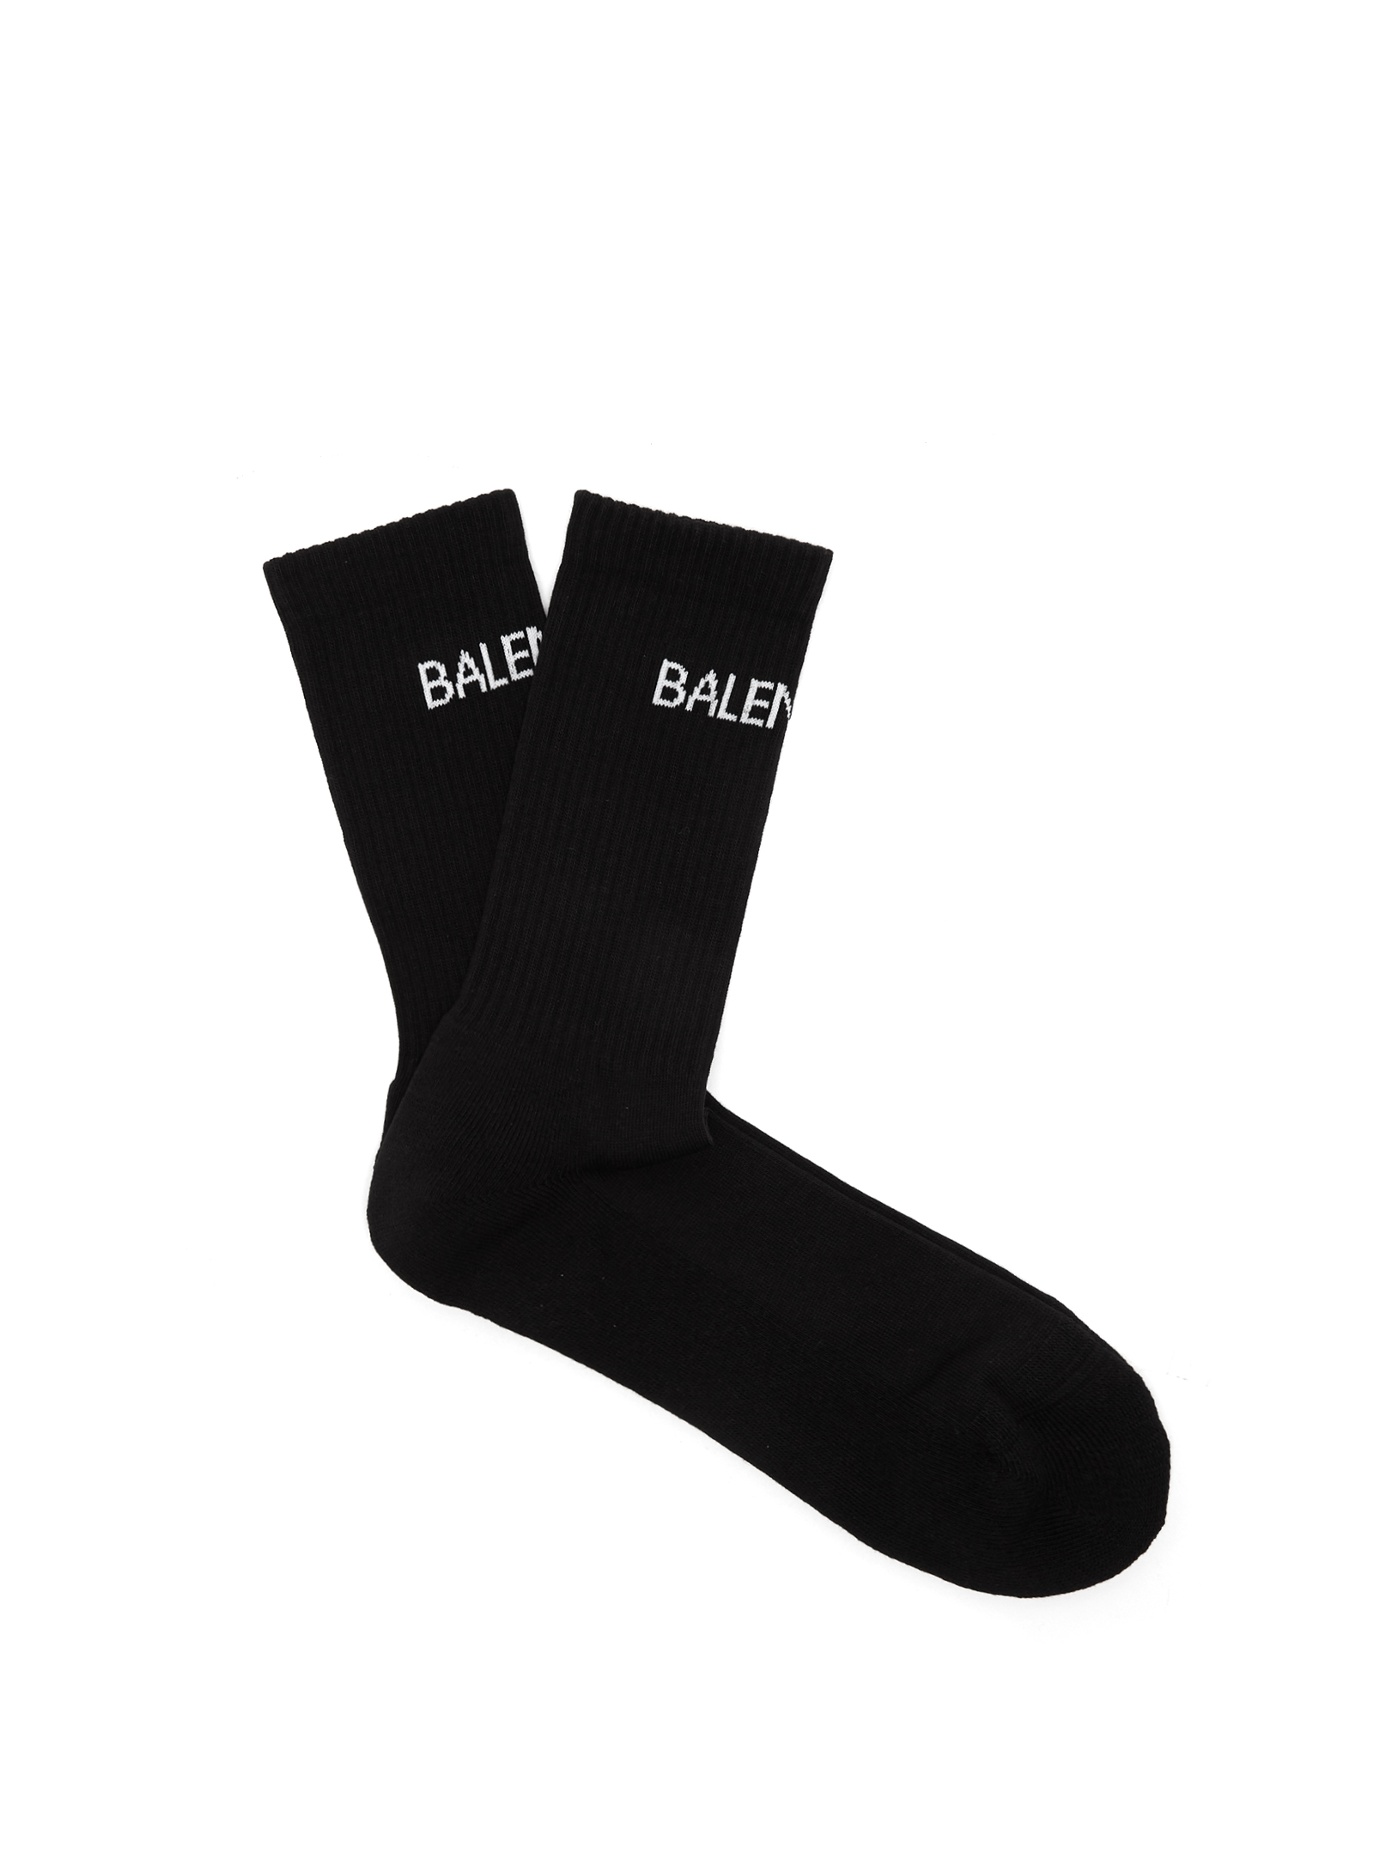 Balenciaga Socks Drop at Matches Fashion – PAUSE Online | Men's Fashion ...